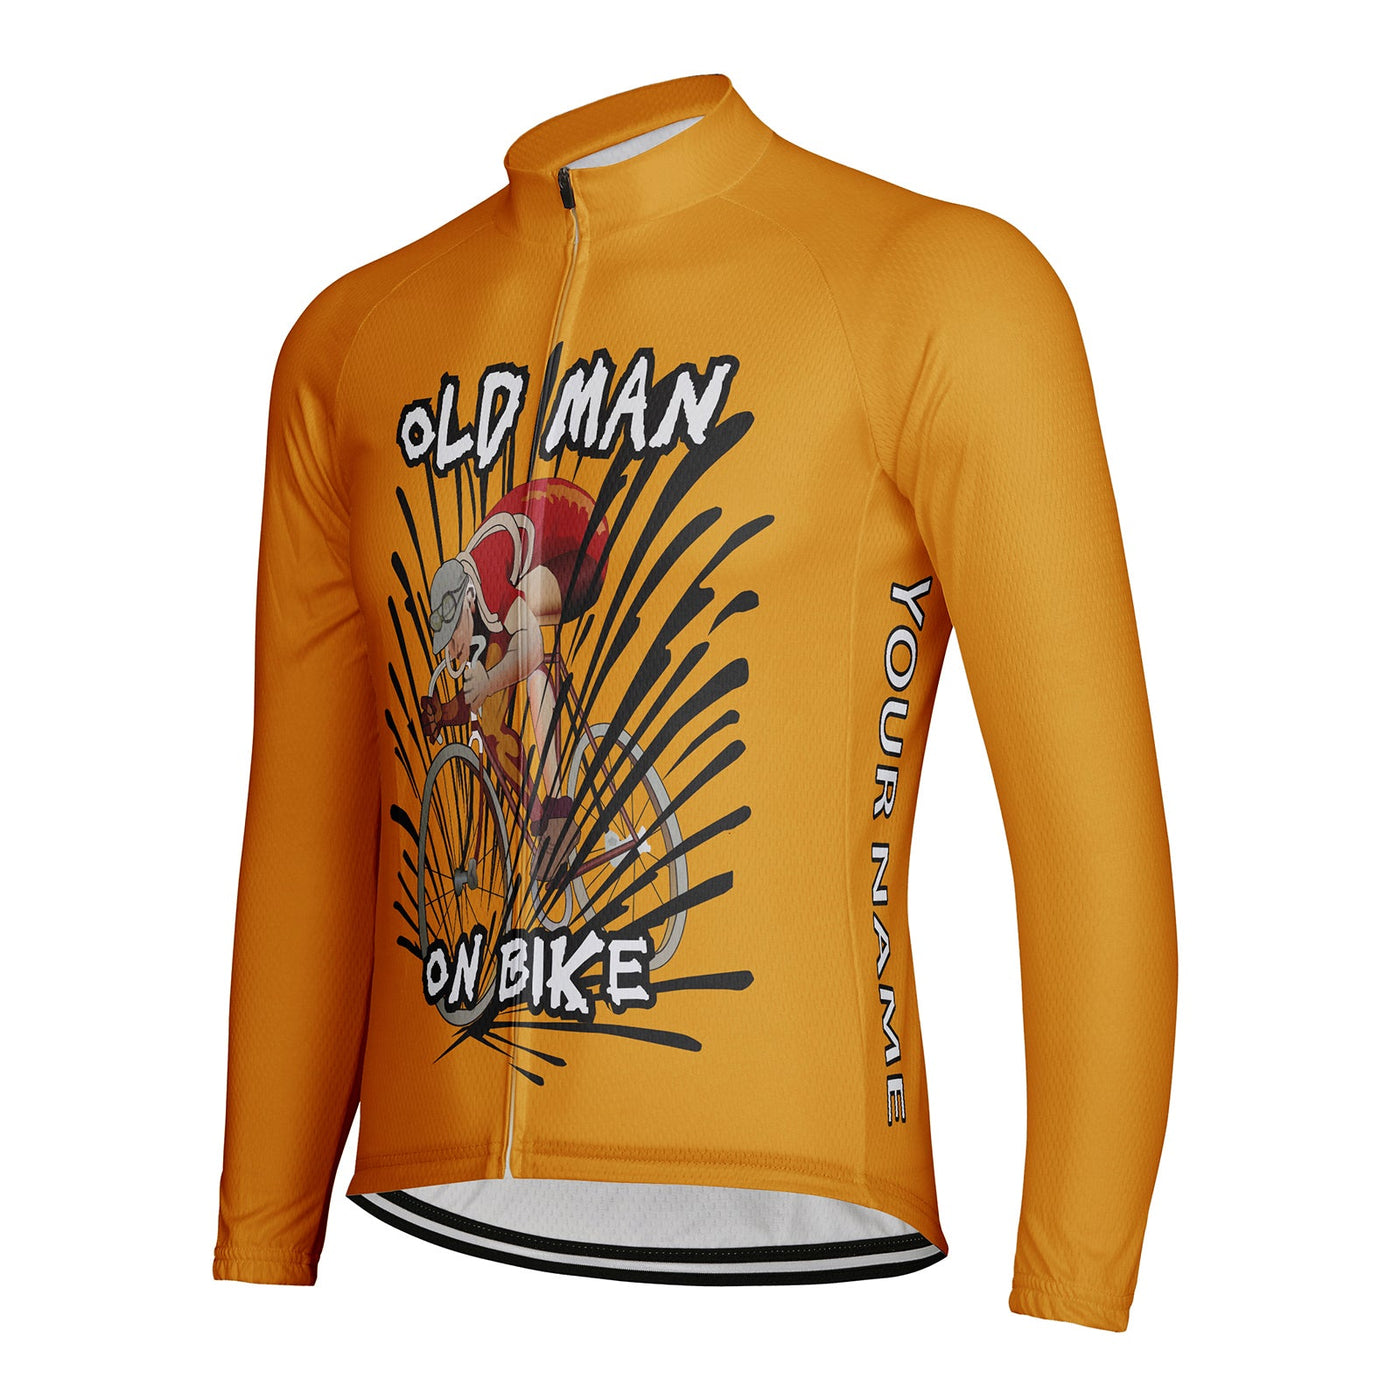 Customized Old Man On Bike Men's Winter Thermal Fleece Cycling Jersey Long Sleeve